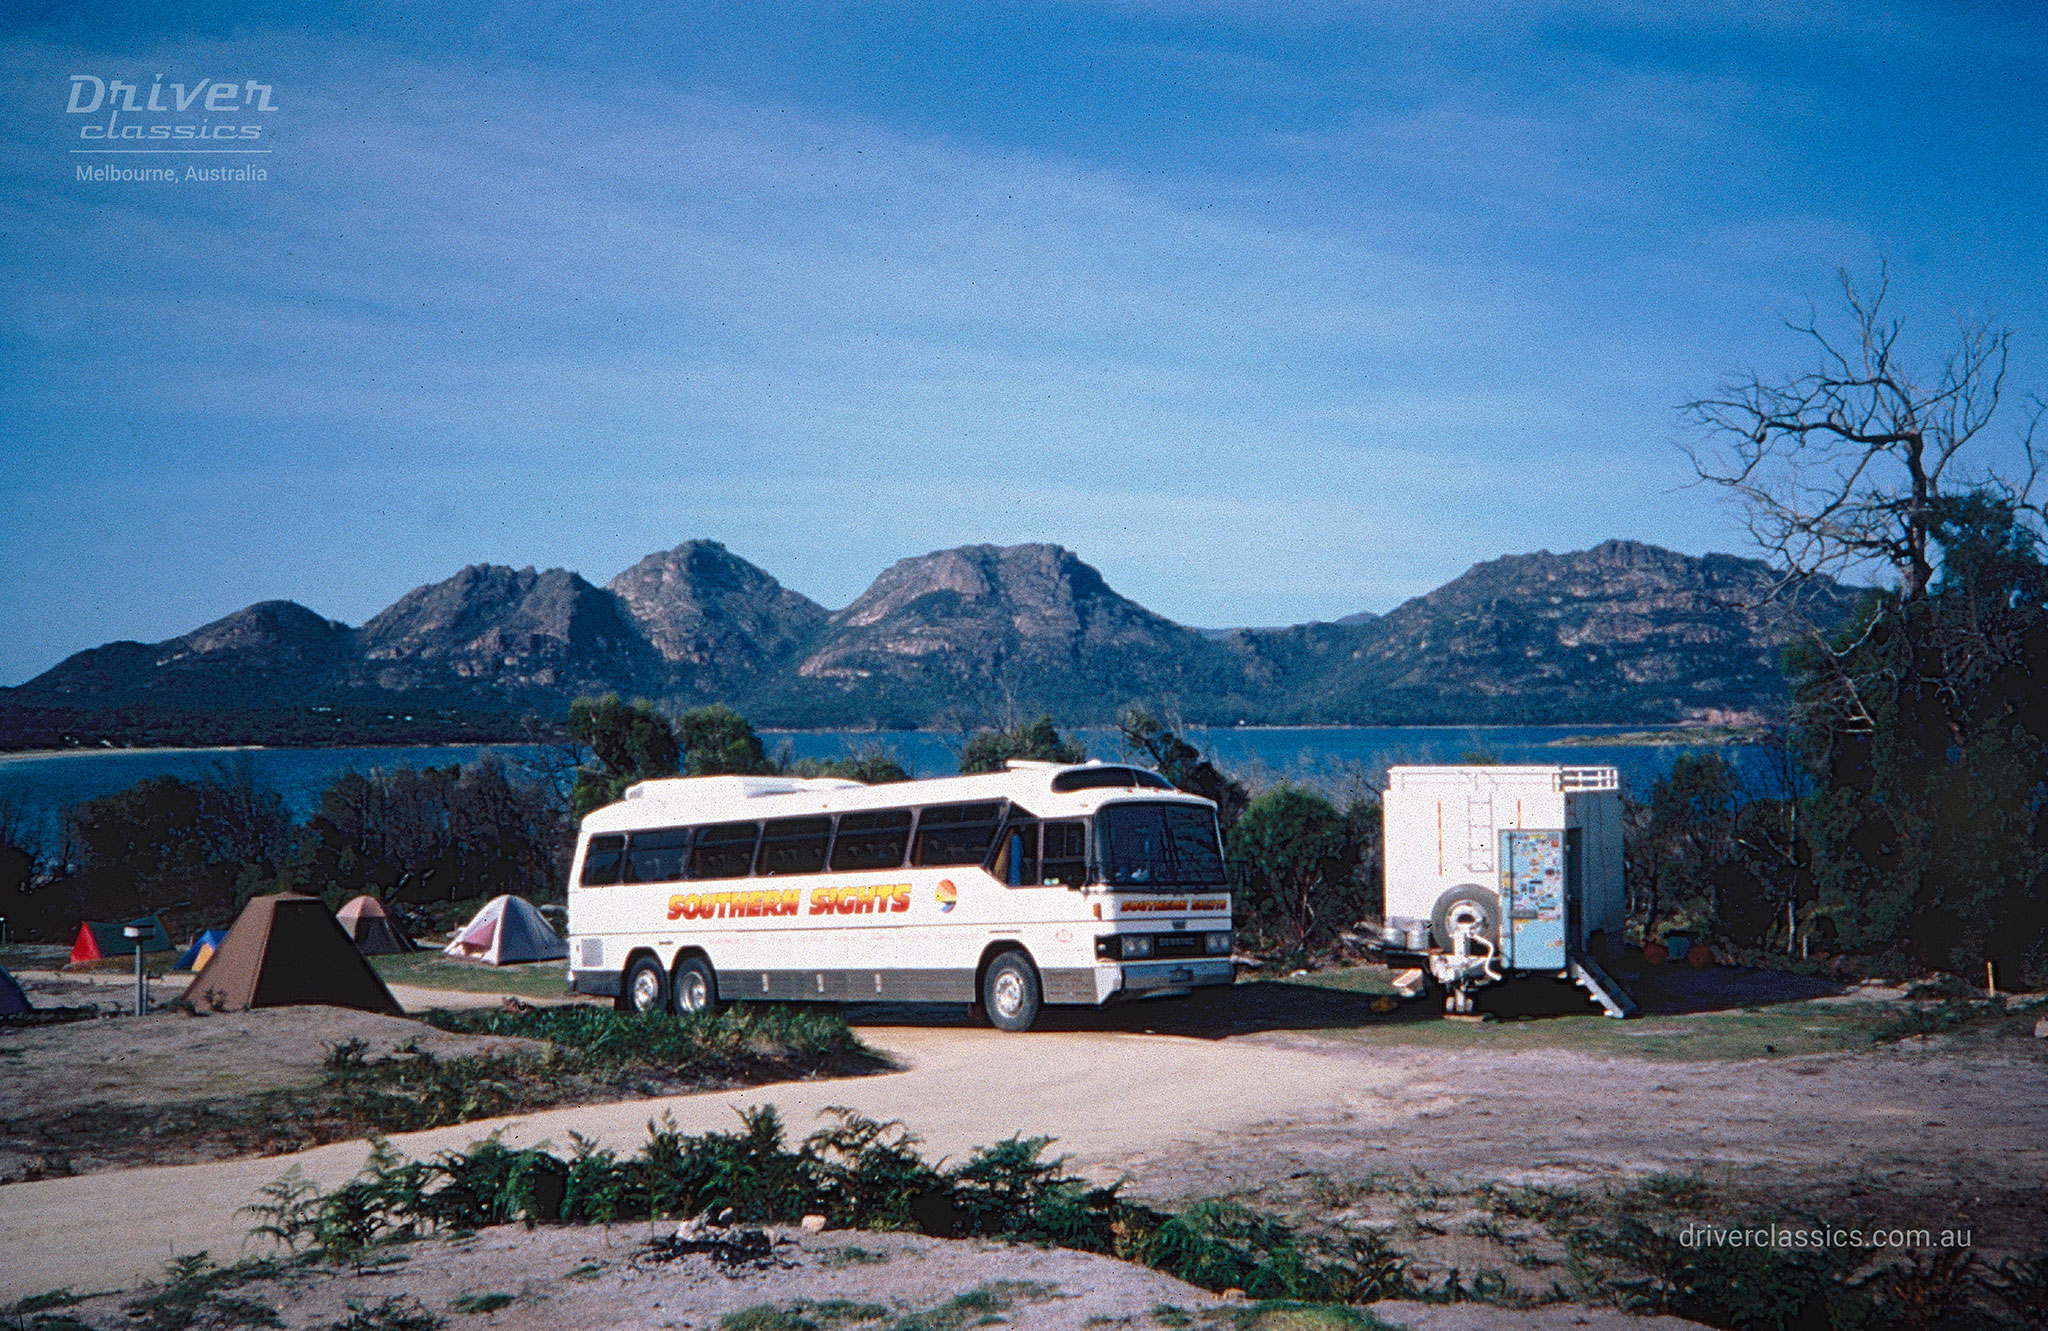 GM Denning DenAir Mono Bus, 1983 model with Southern Sights livery, Freycinet Peninsula Tasmania. Photo taken mid 1990s.